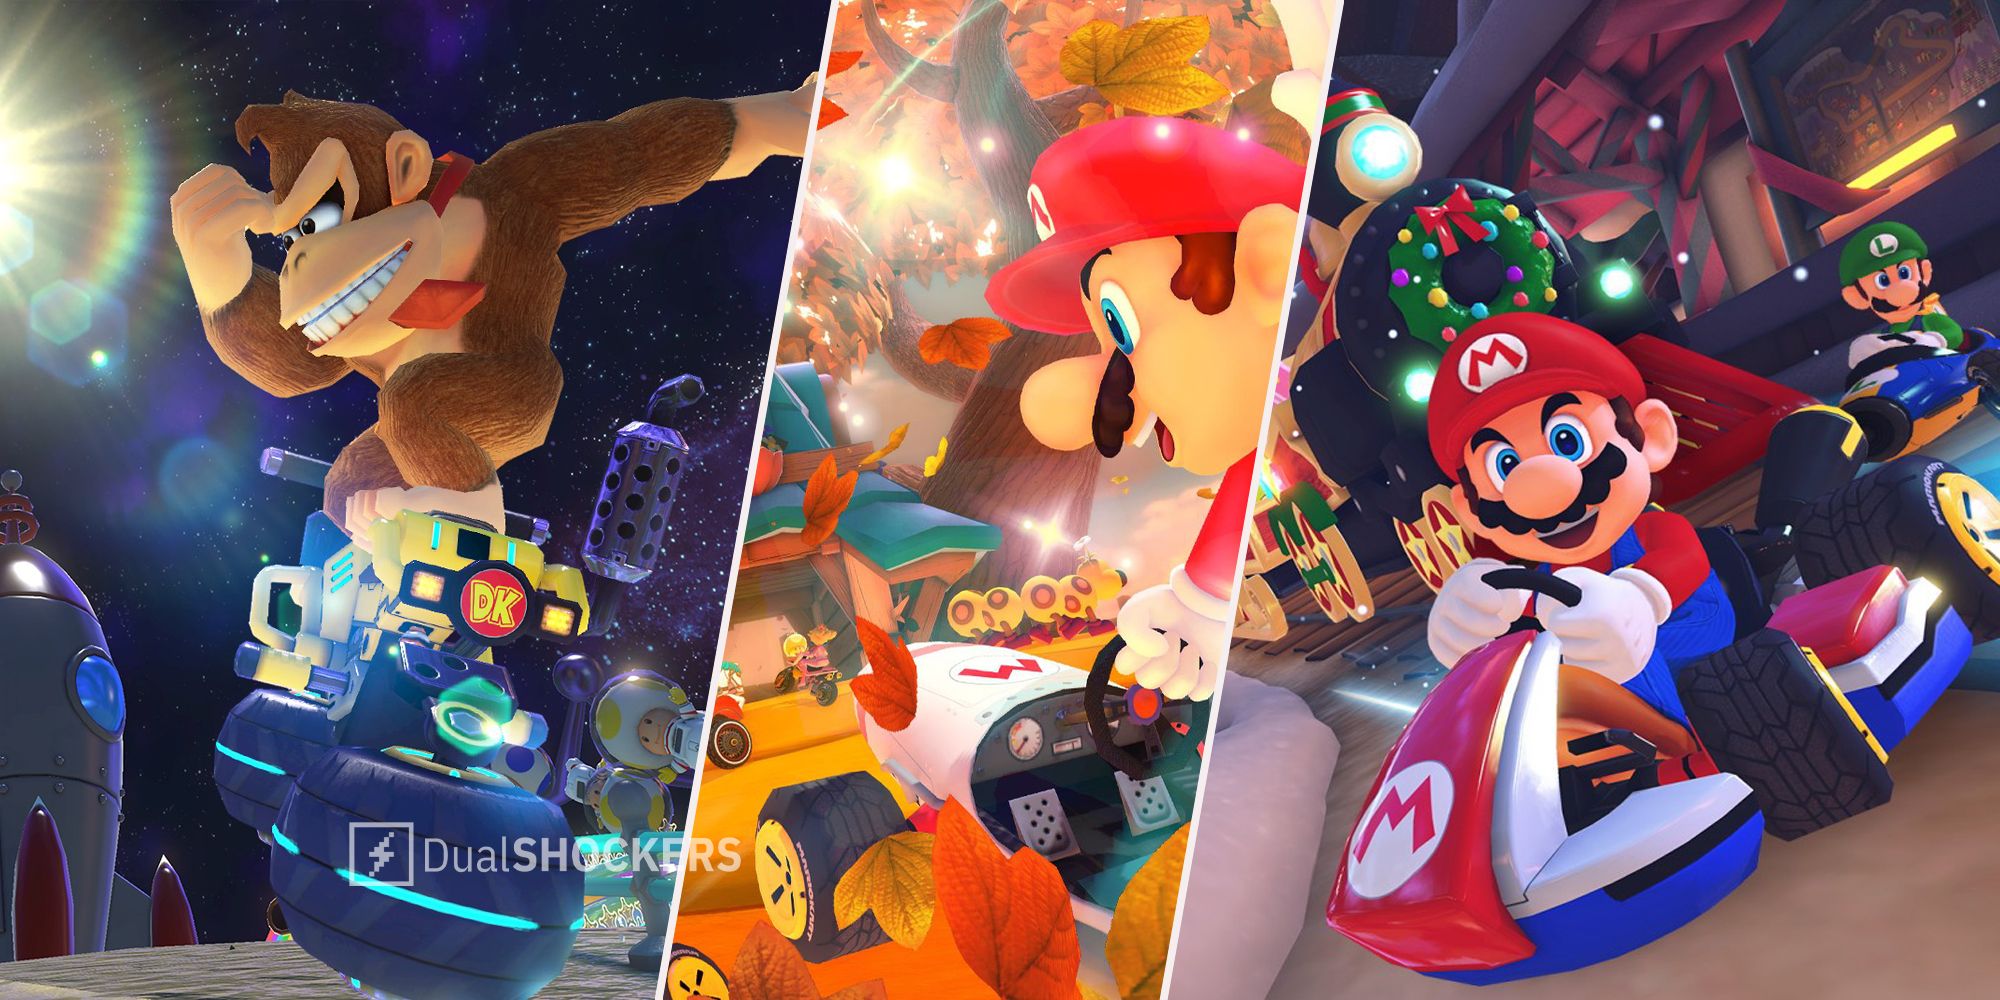 Mario Kart 8 Deluxe Wave 3 DLC Tracks 3DS Rainbow Road (Mario Kart 7), Maple Treeway (Mario Kart Wii), Merry Mountain (Mario Kart Tour)